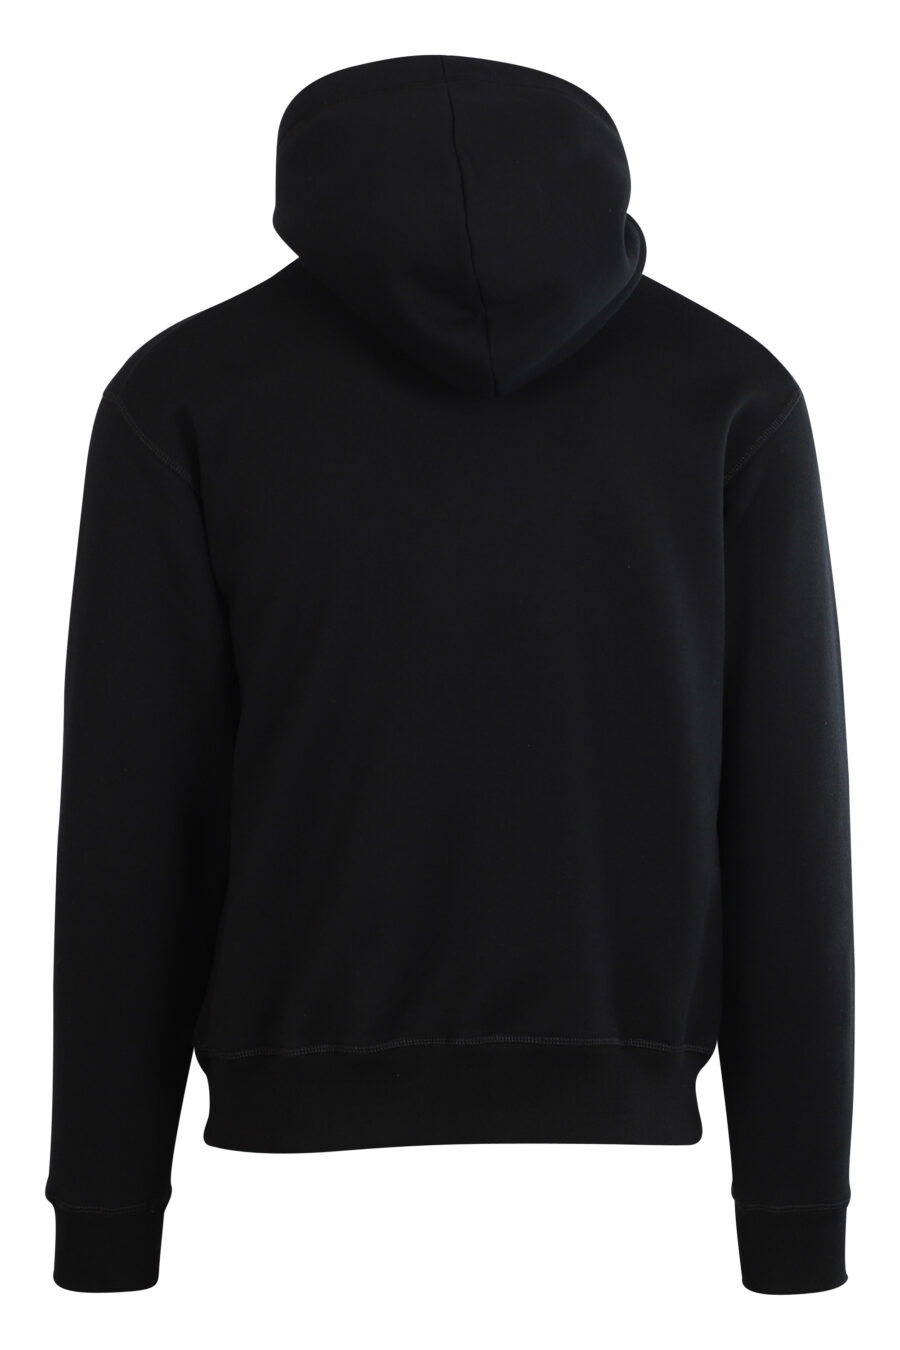 Black hooded sweatshirt with maxilogo "pac-man" - 8054148204082 3